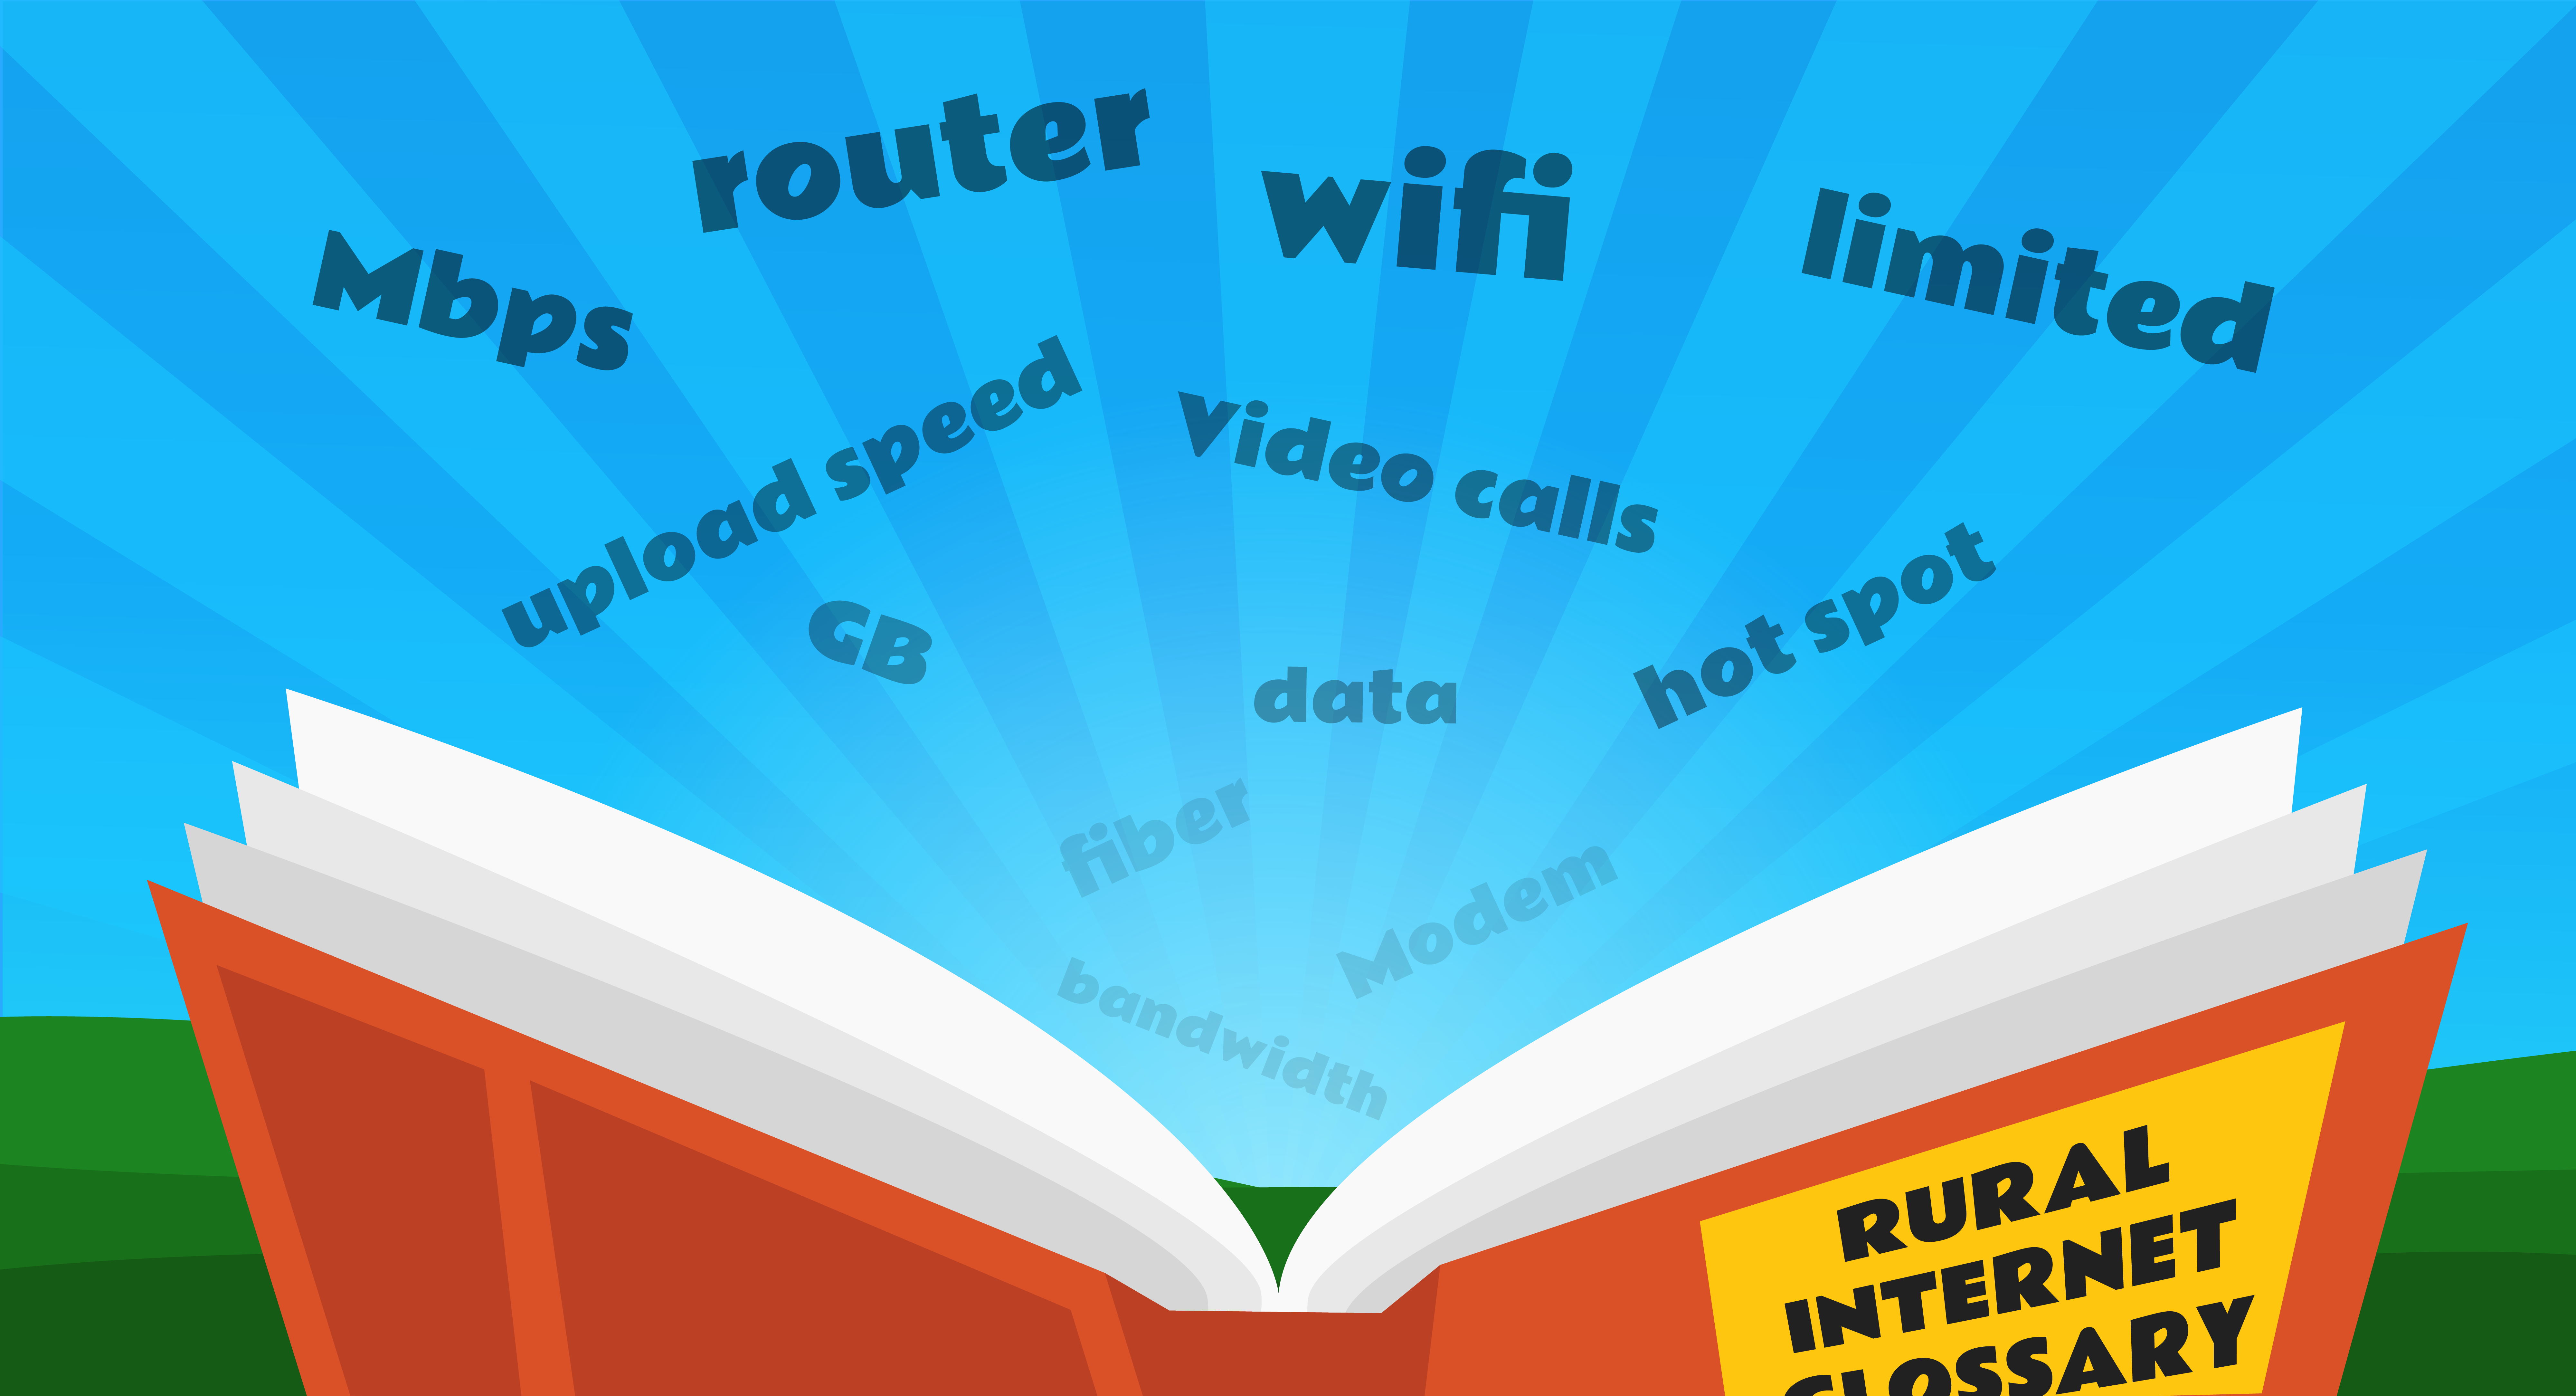 A Rural Internet Glossary